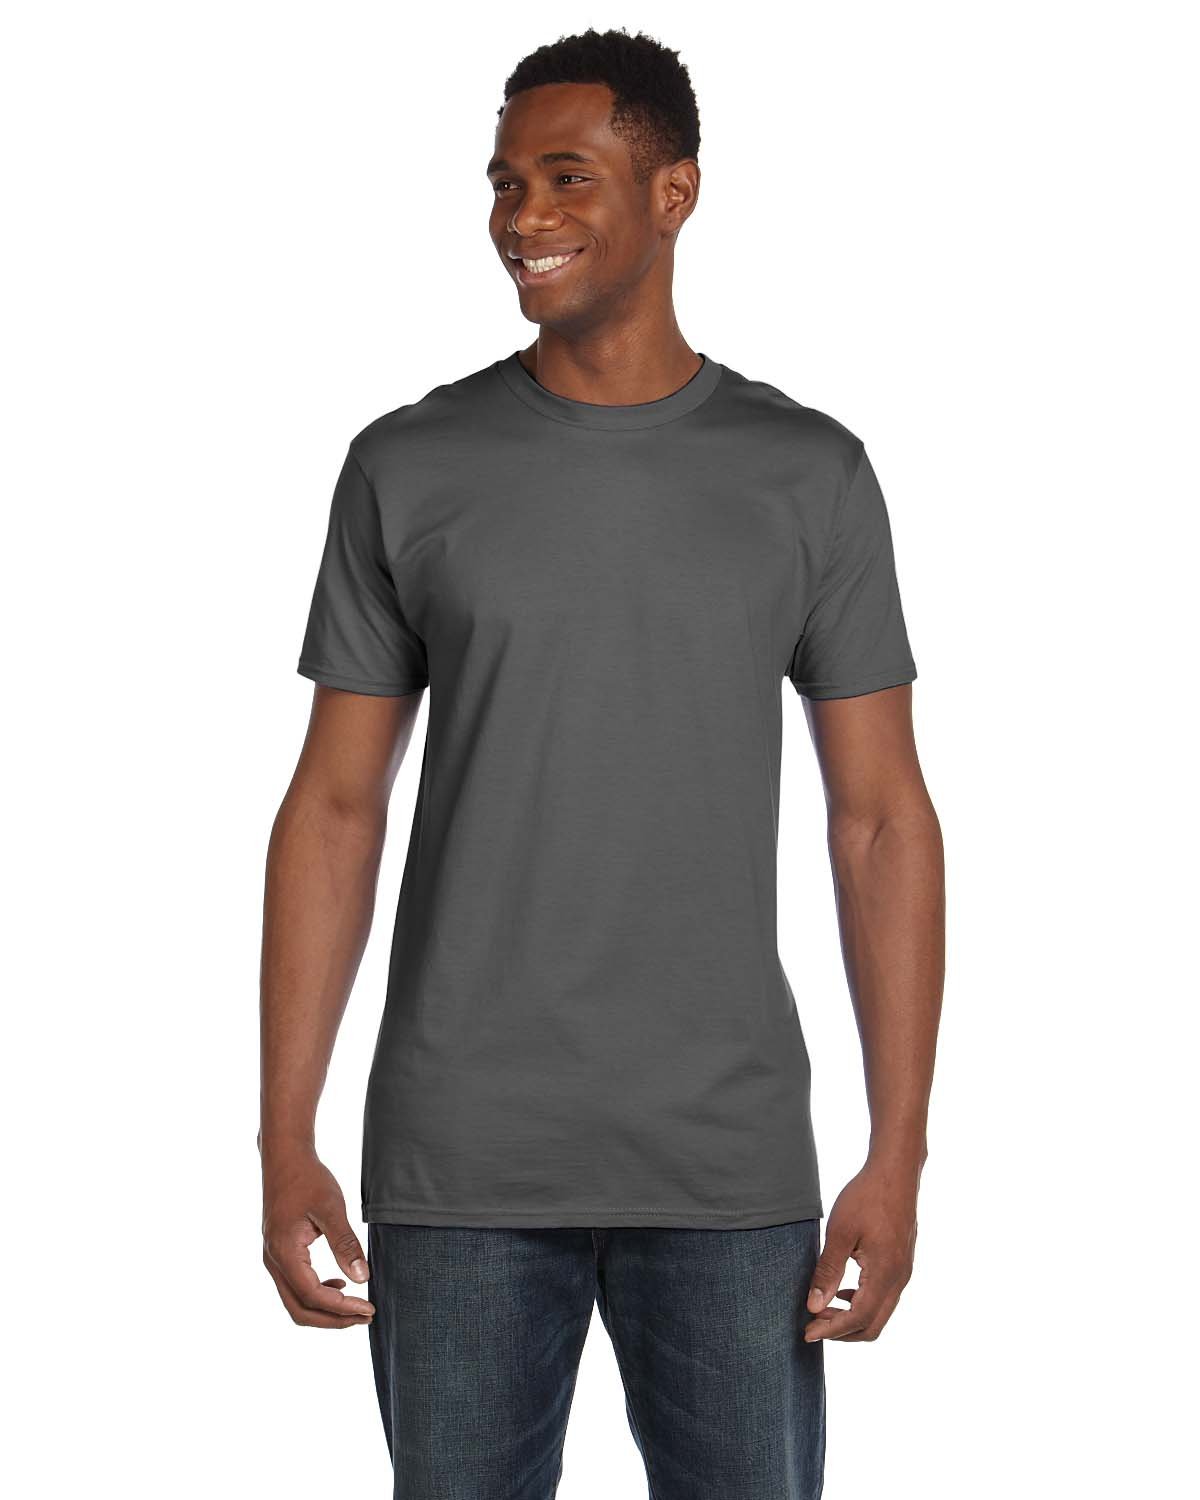 Hanes Men's Nano Premium Cotton T-Shirt (Pack of 2), Smoke Gray, Large